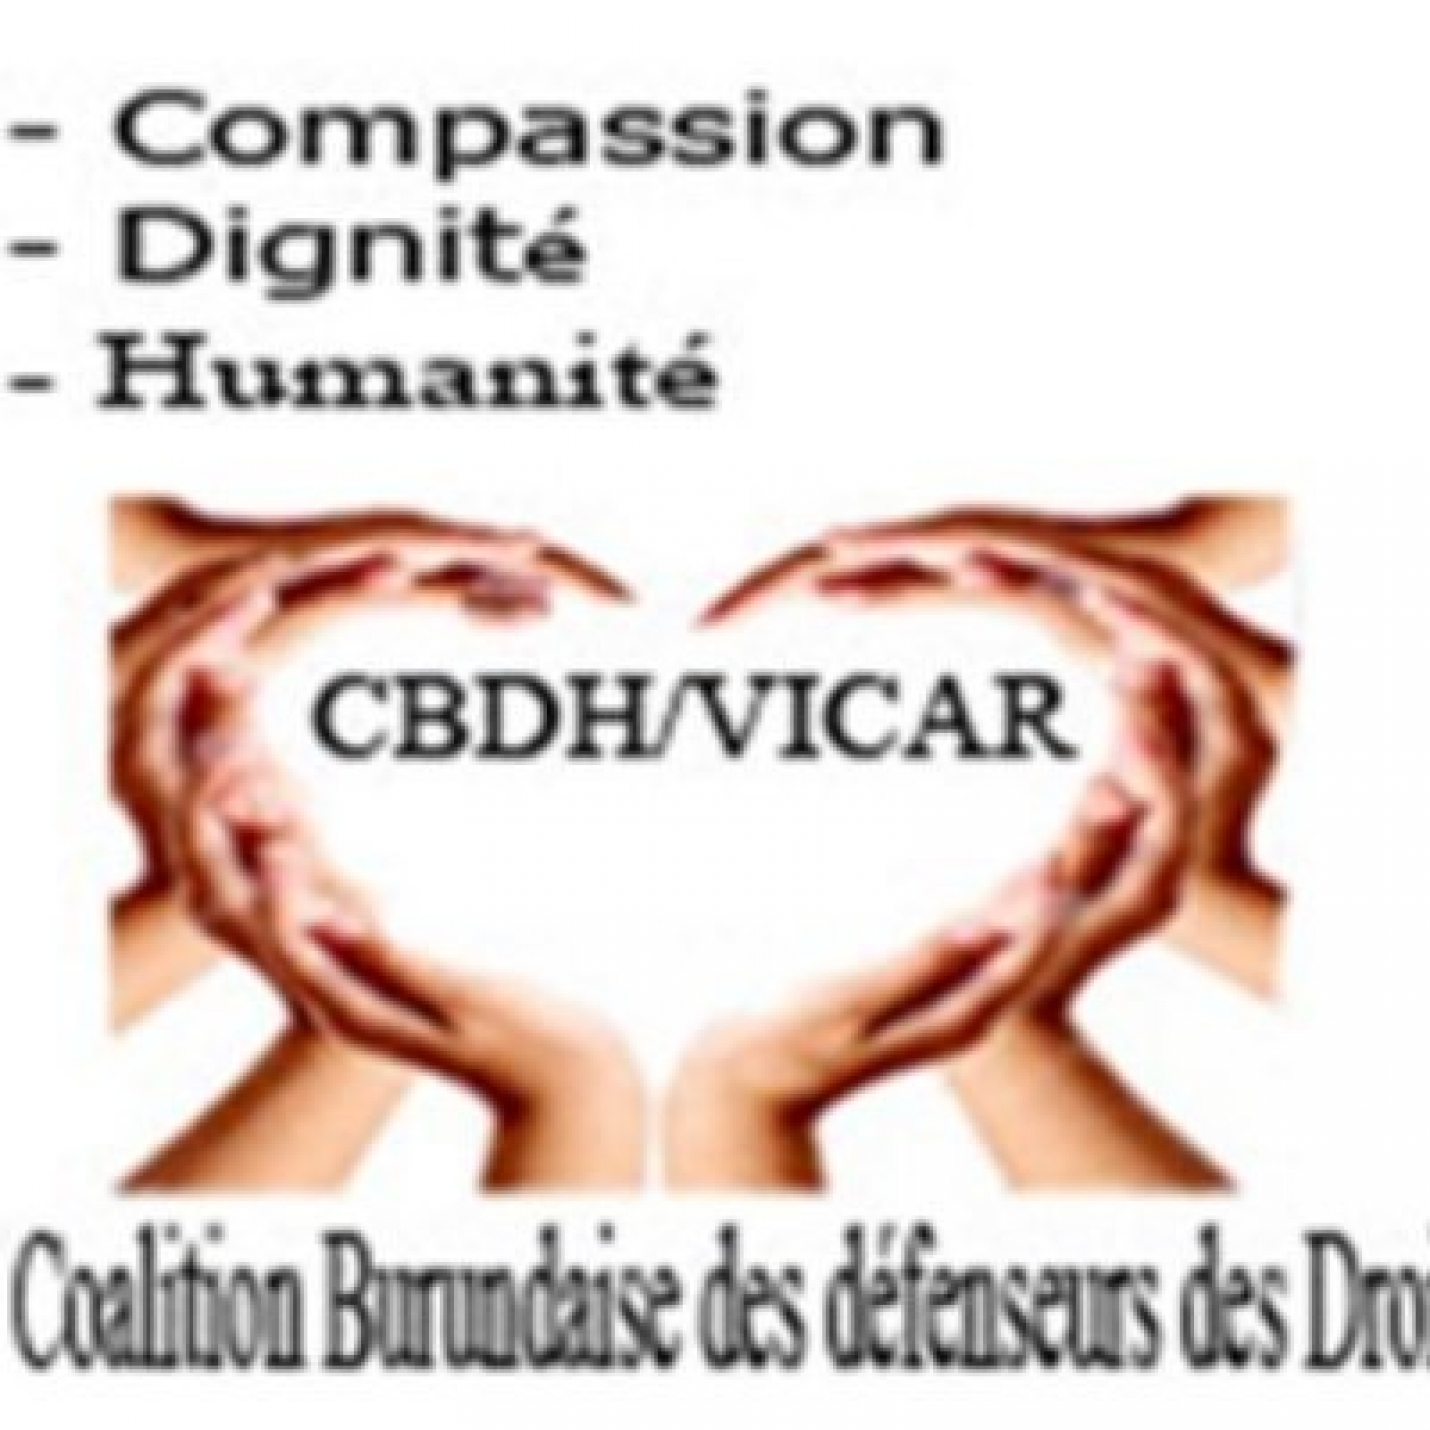 Burundi-Tanzanie : CBDH/VICAR dénonce un accord de transfert des détenus